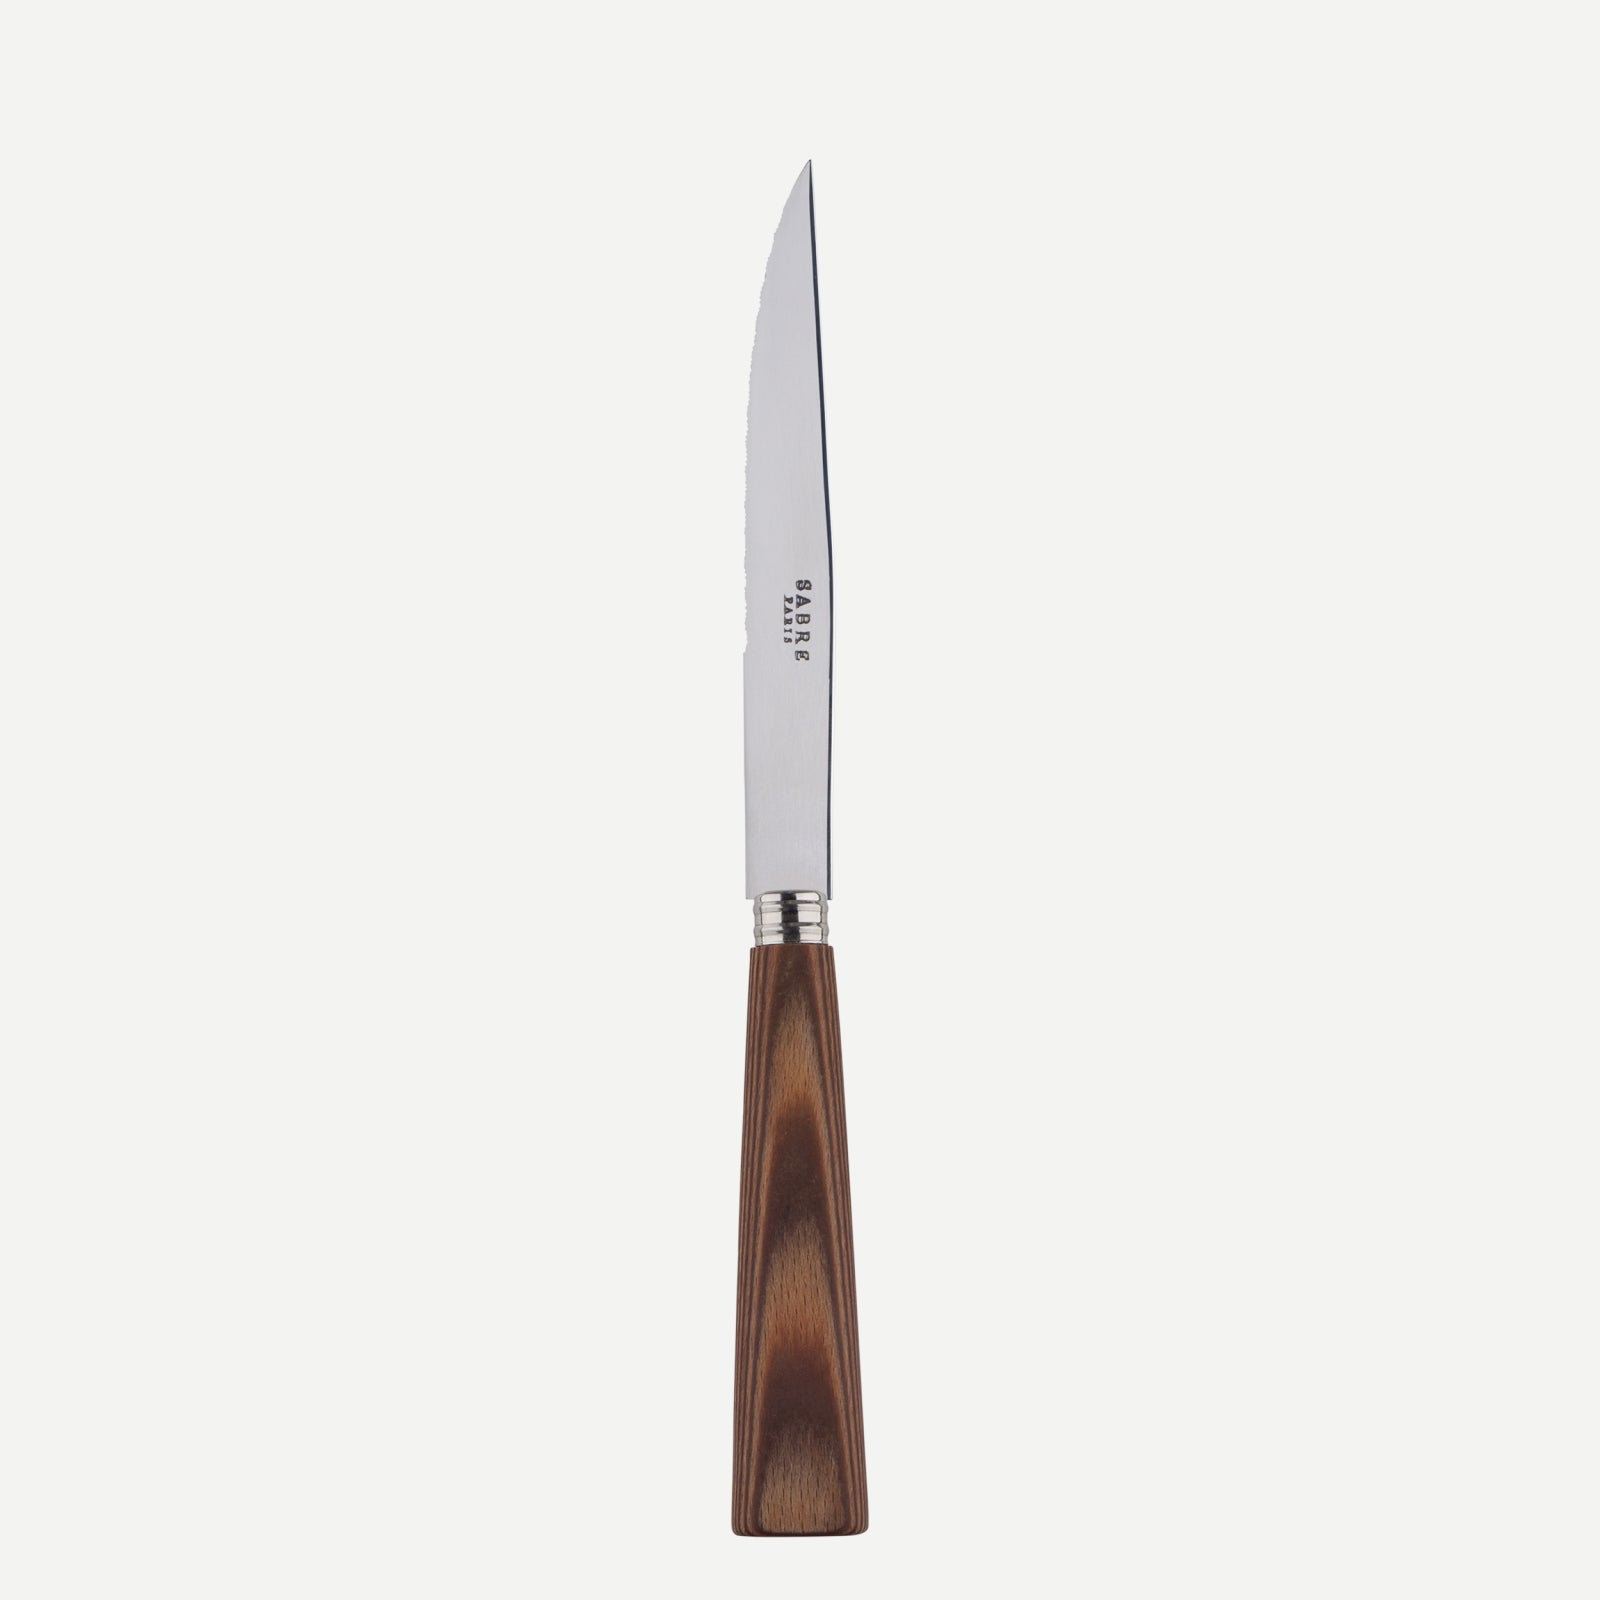 Steack knife - Nature - Light press wood